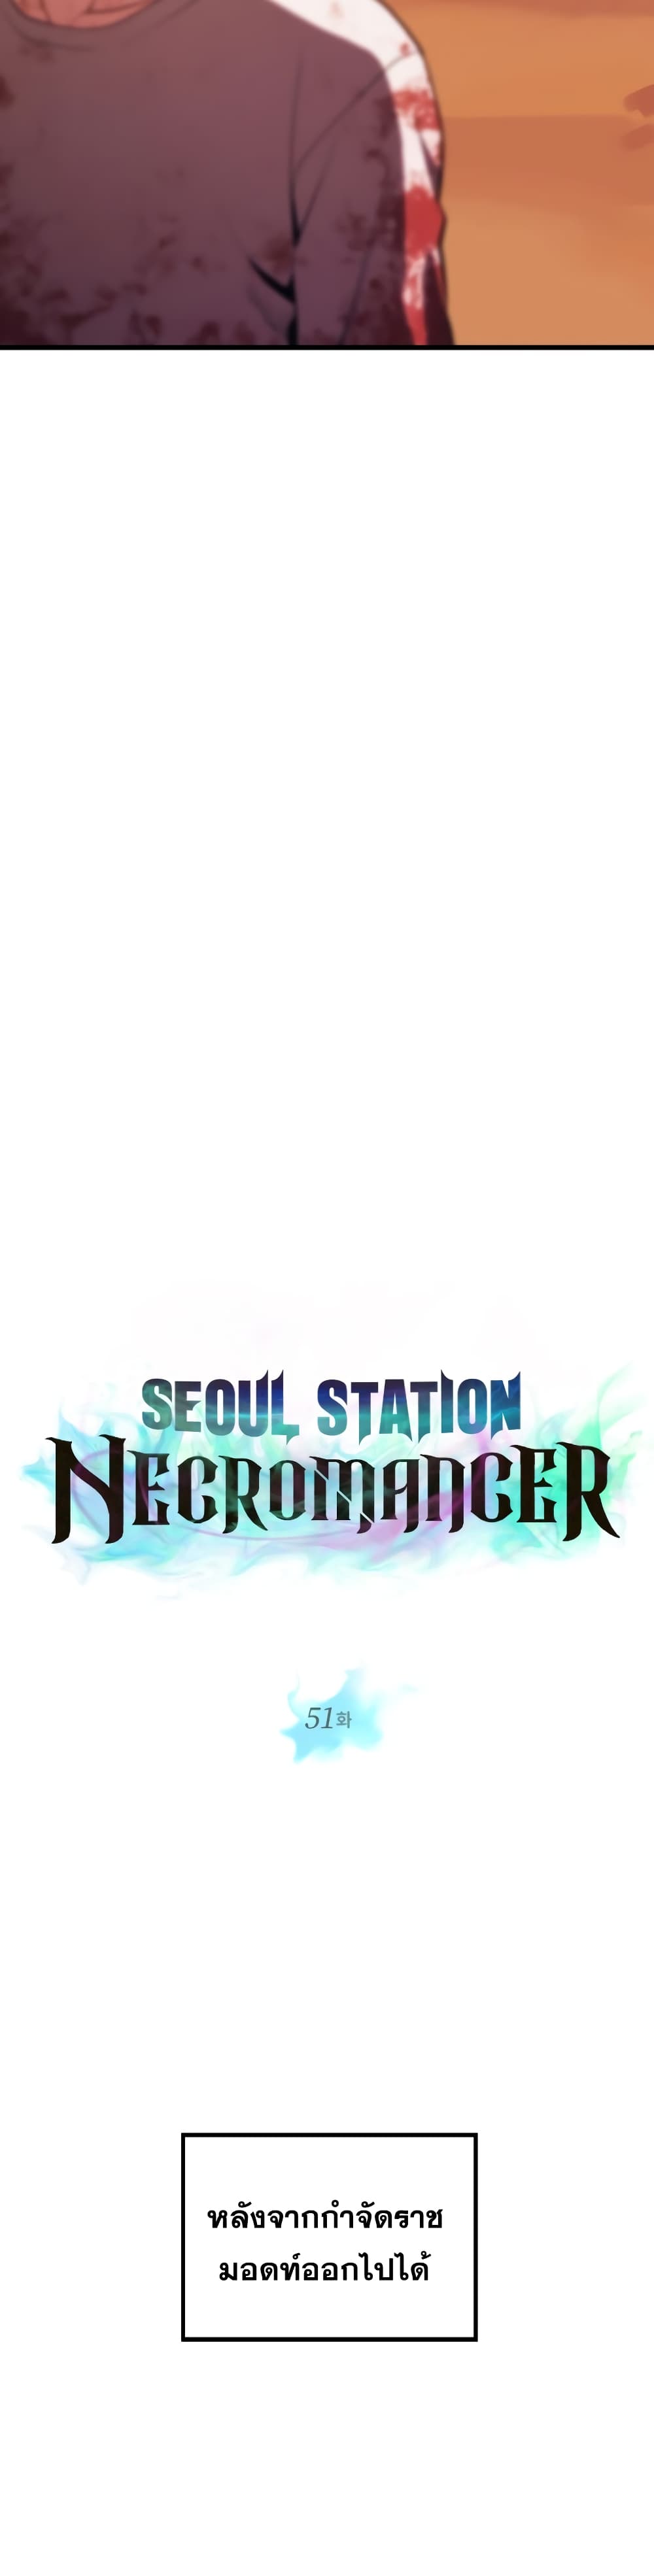 Seoul Station Necromancer 51-51